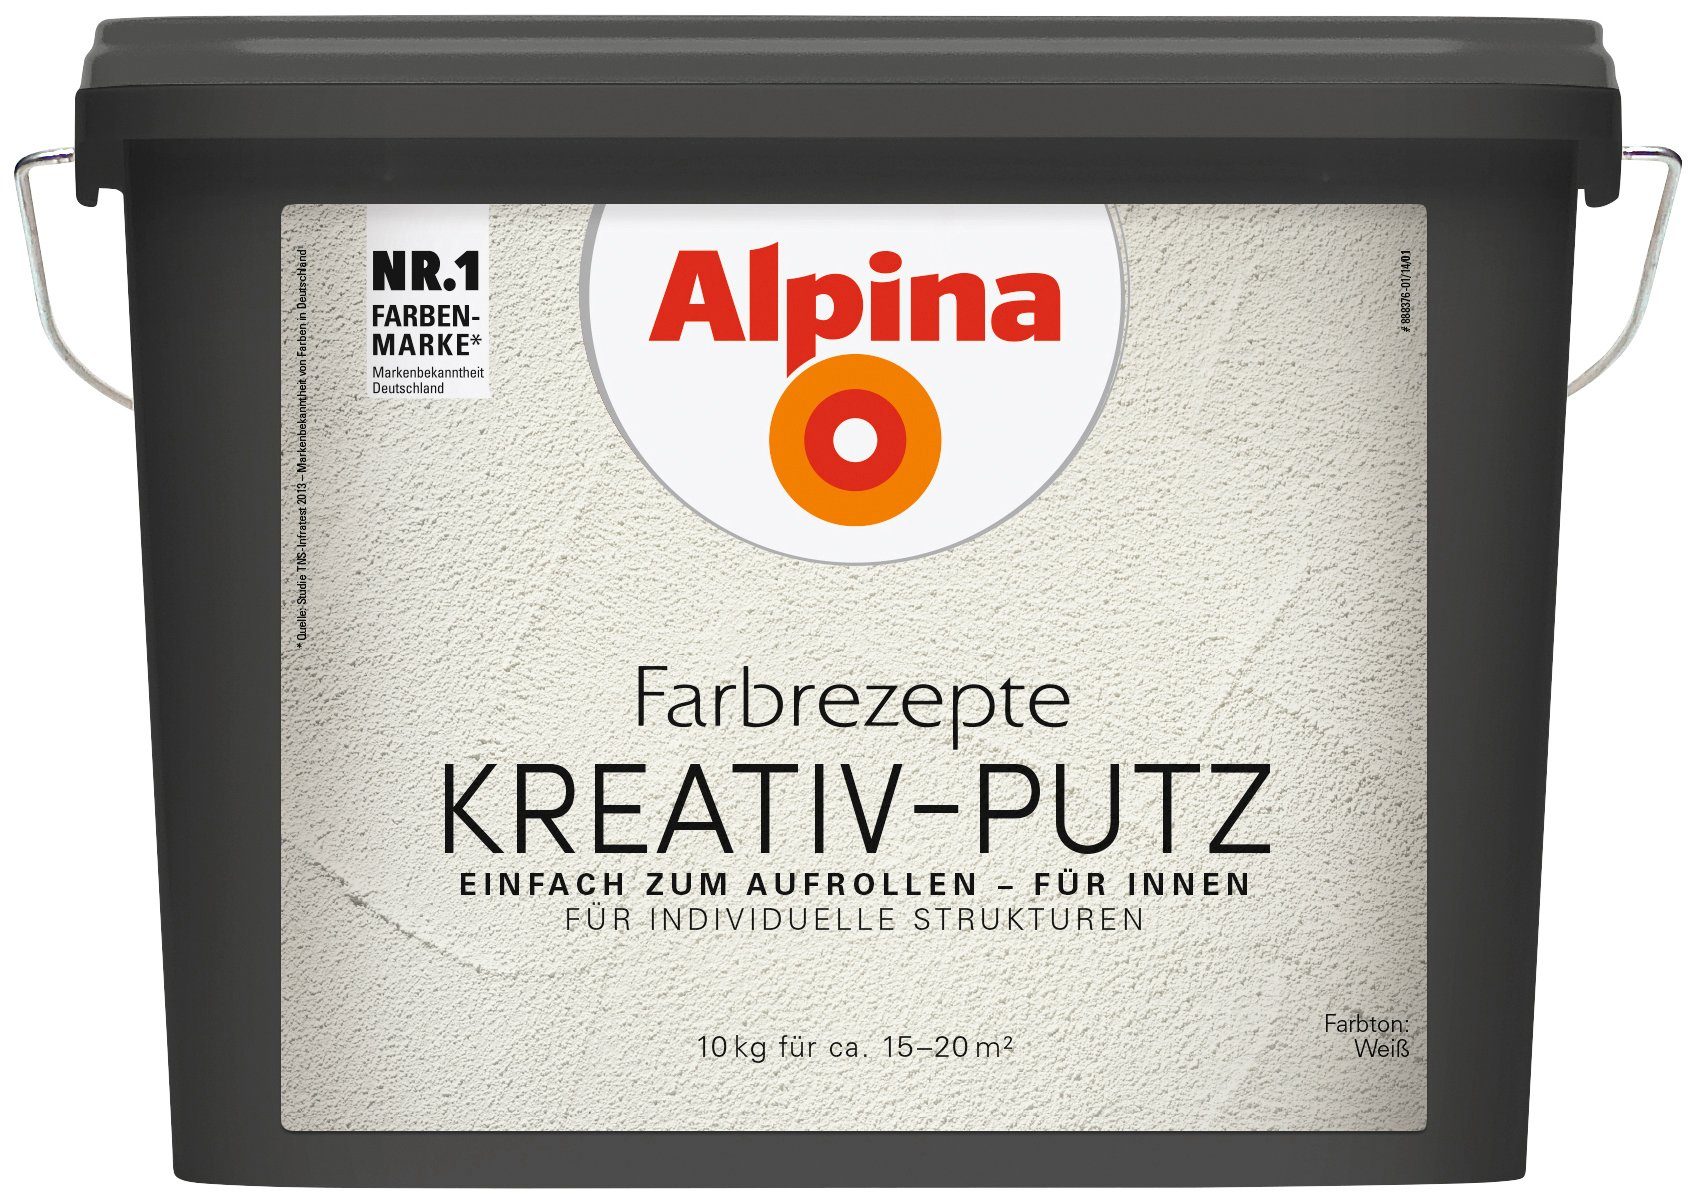 10 Farbrezepte - Kreativ-Putz kg Kunstharzputz weiß, Alpina